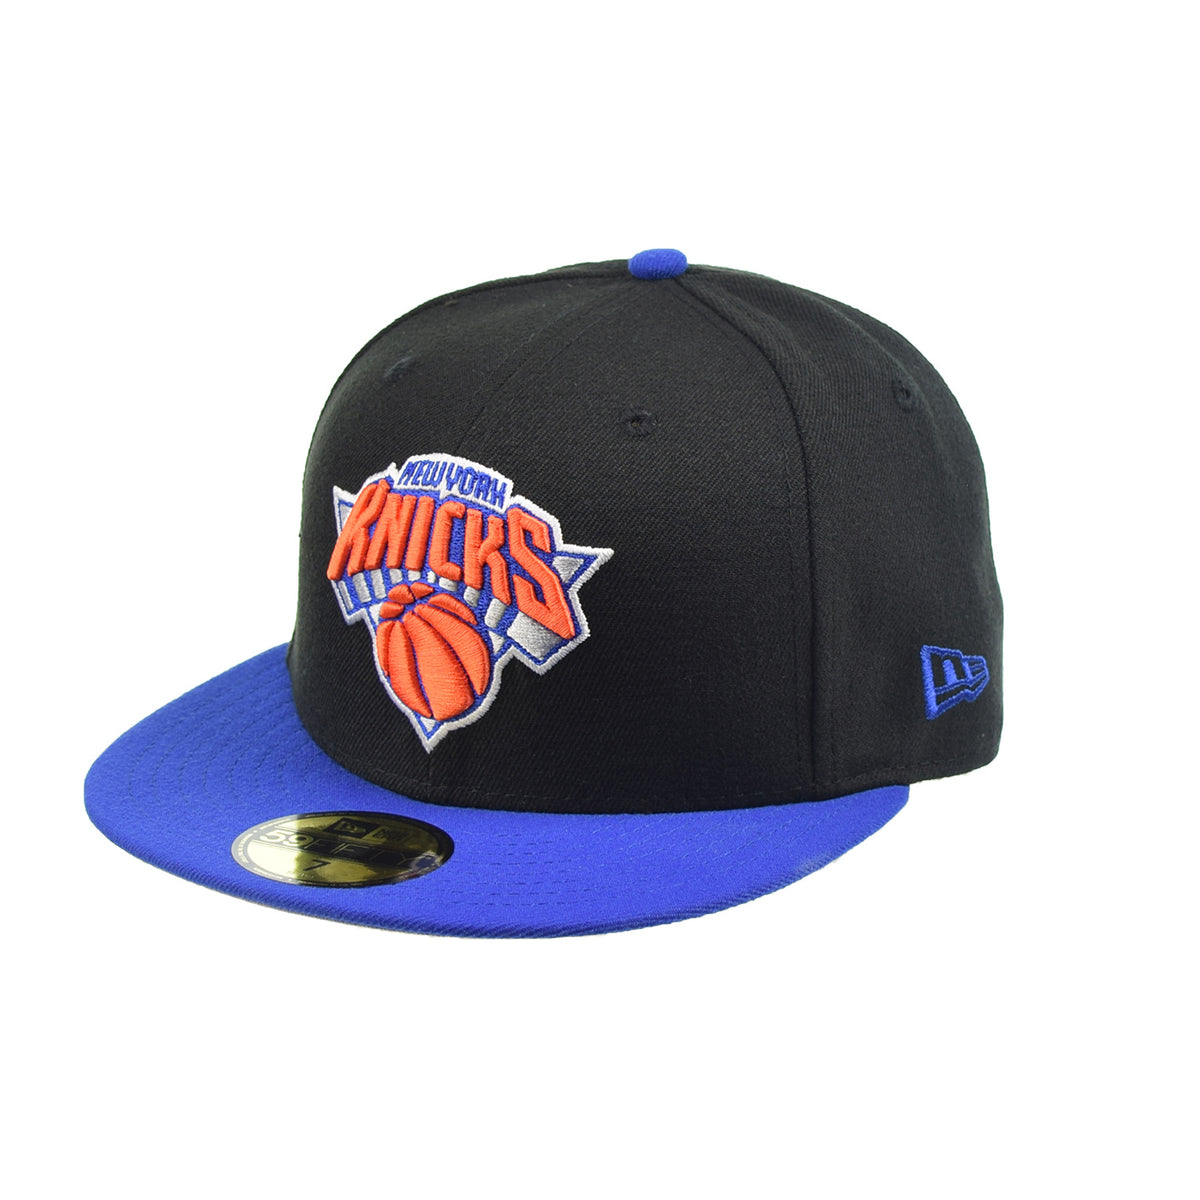 New Era Knicks Retro Title Snapback Hat